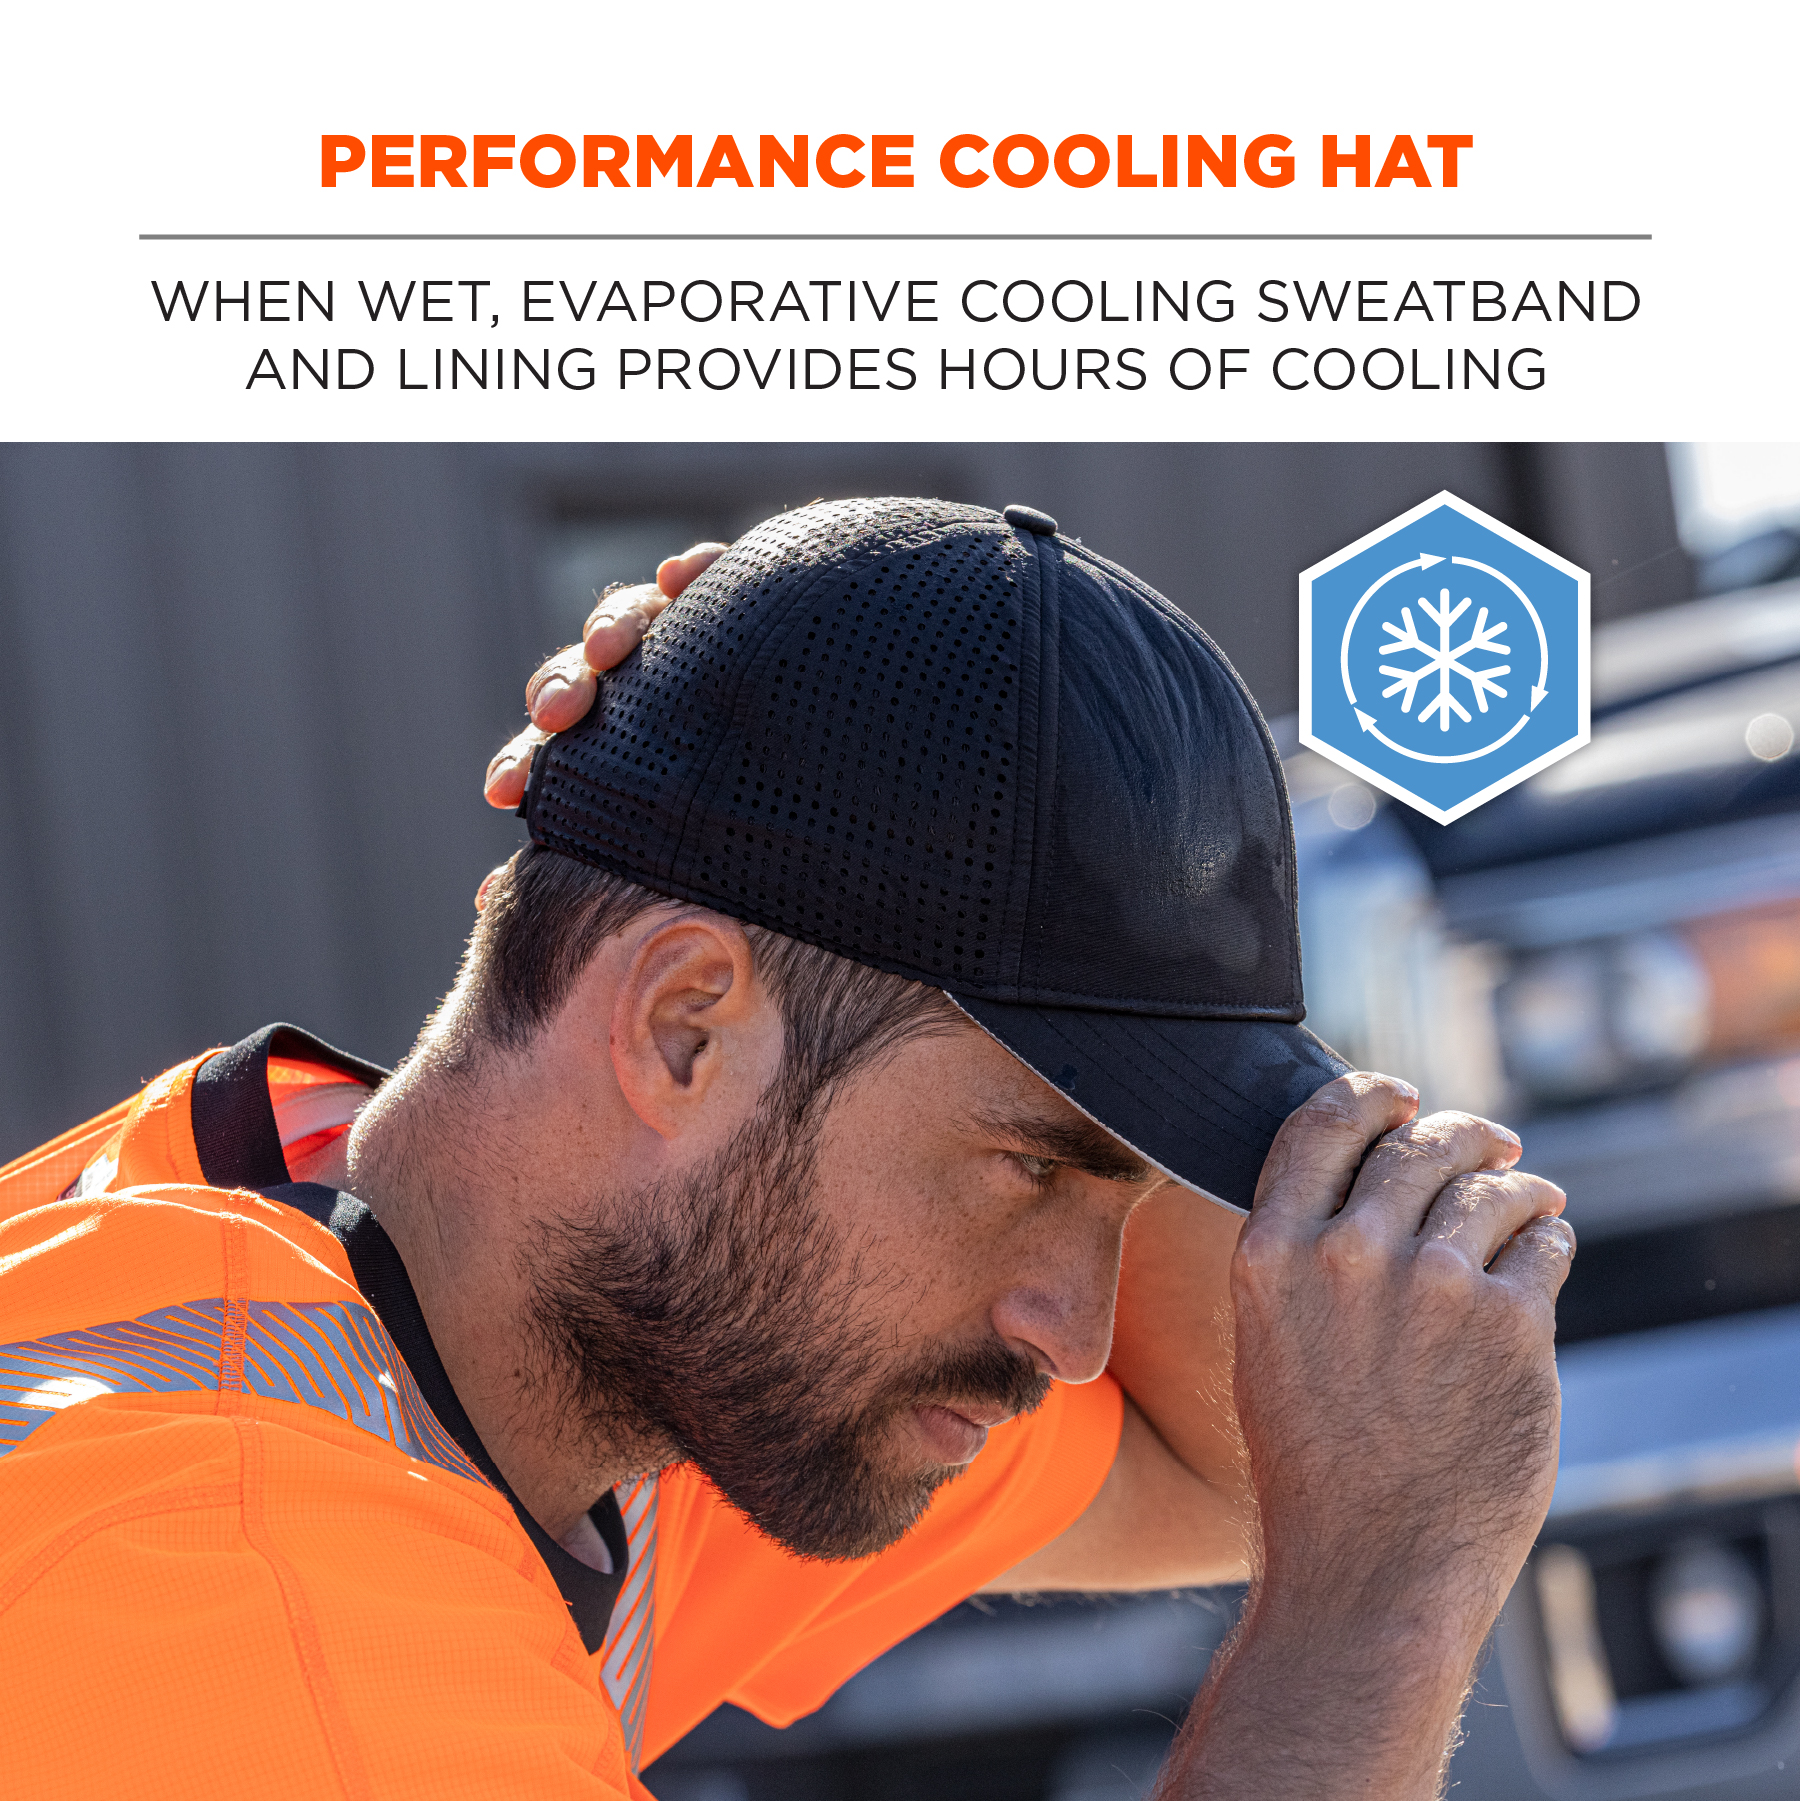 Performance Cooling Baseball Hat